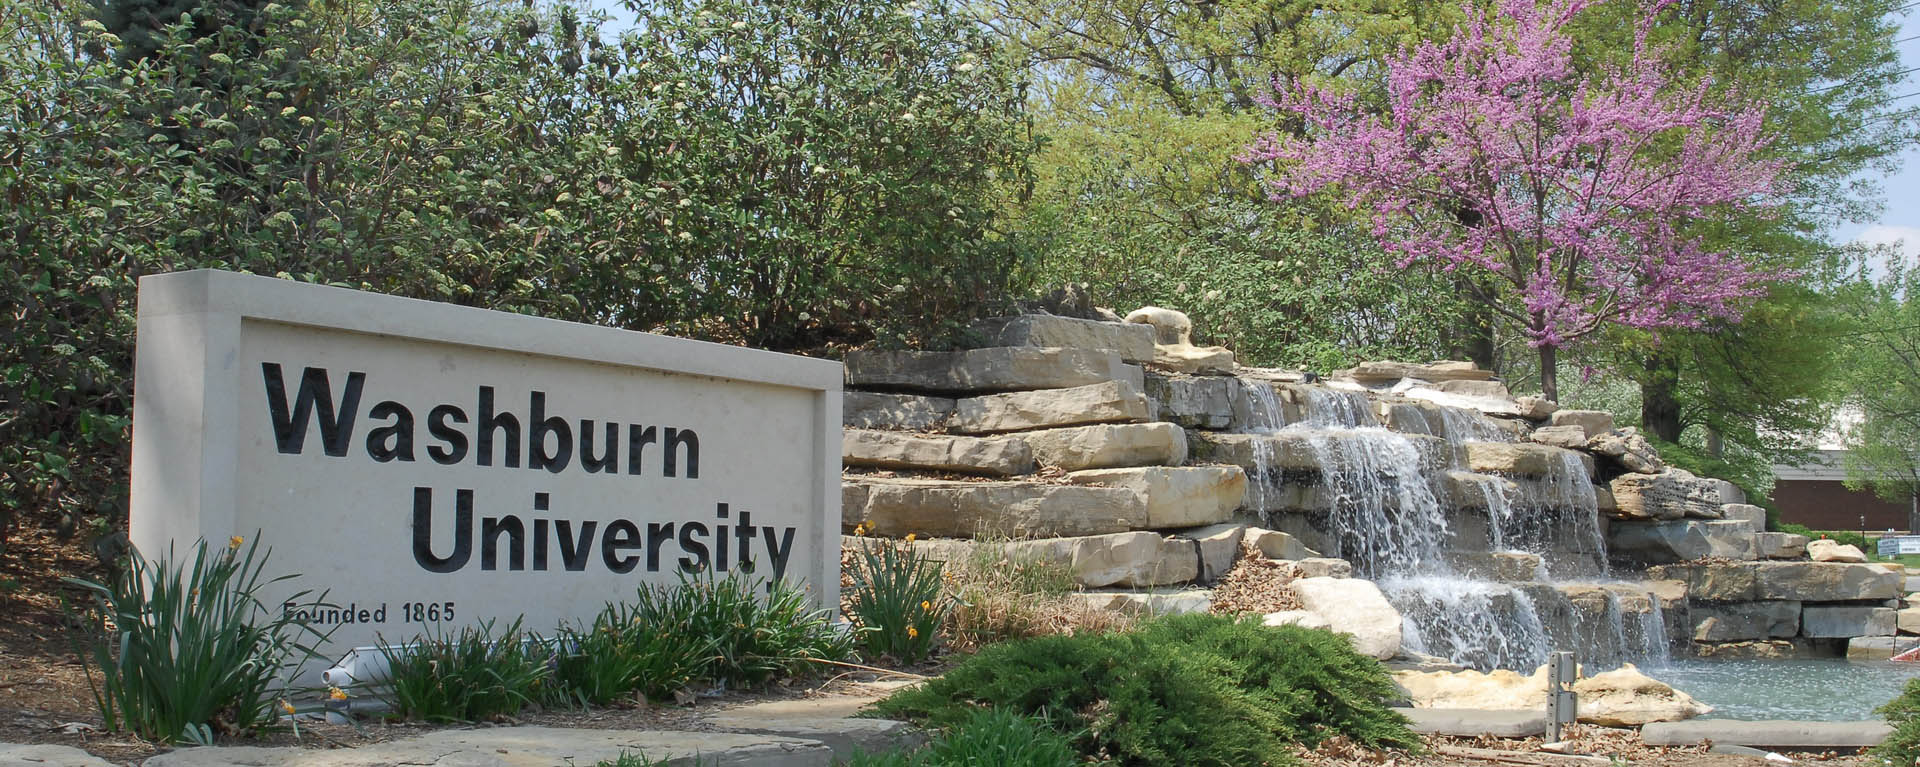 Washburn University sign by waterfall